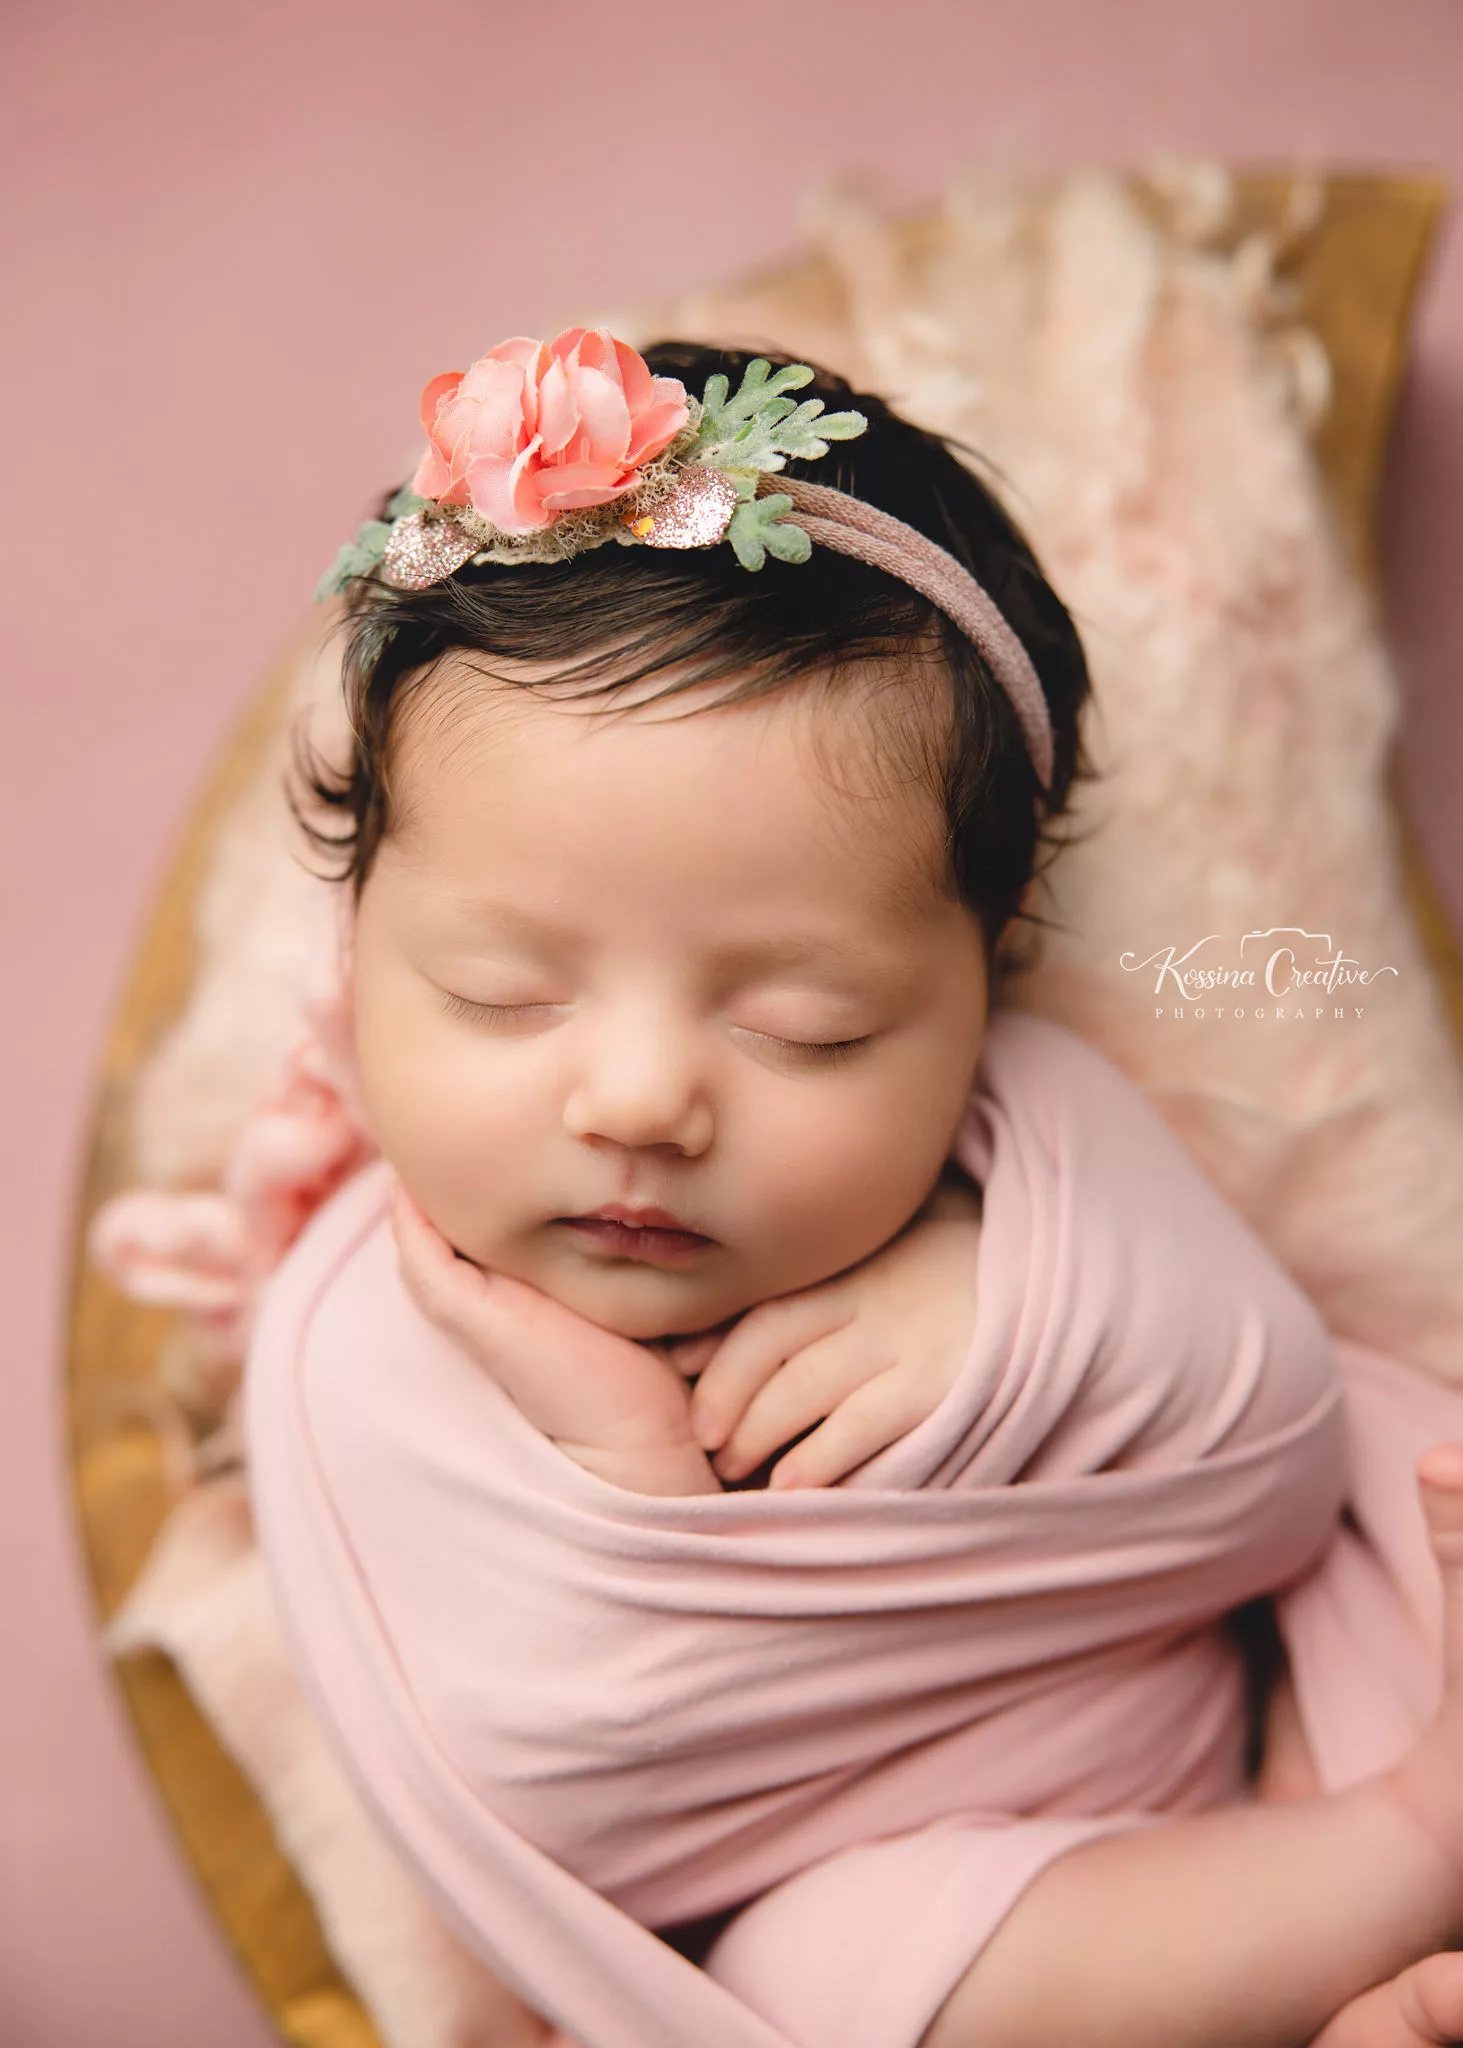 Orlando Newborn Photographer Baby Girl Photo studio pink wrap in baby bowl with pick flower headband